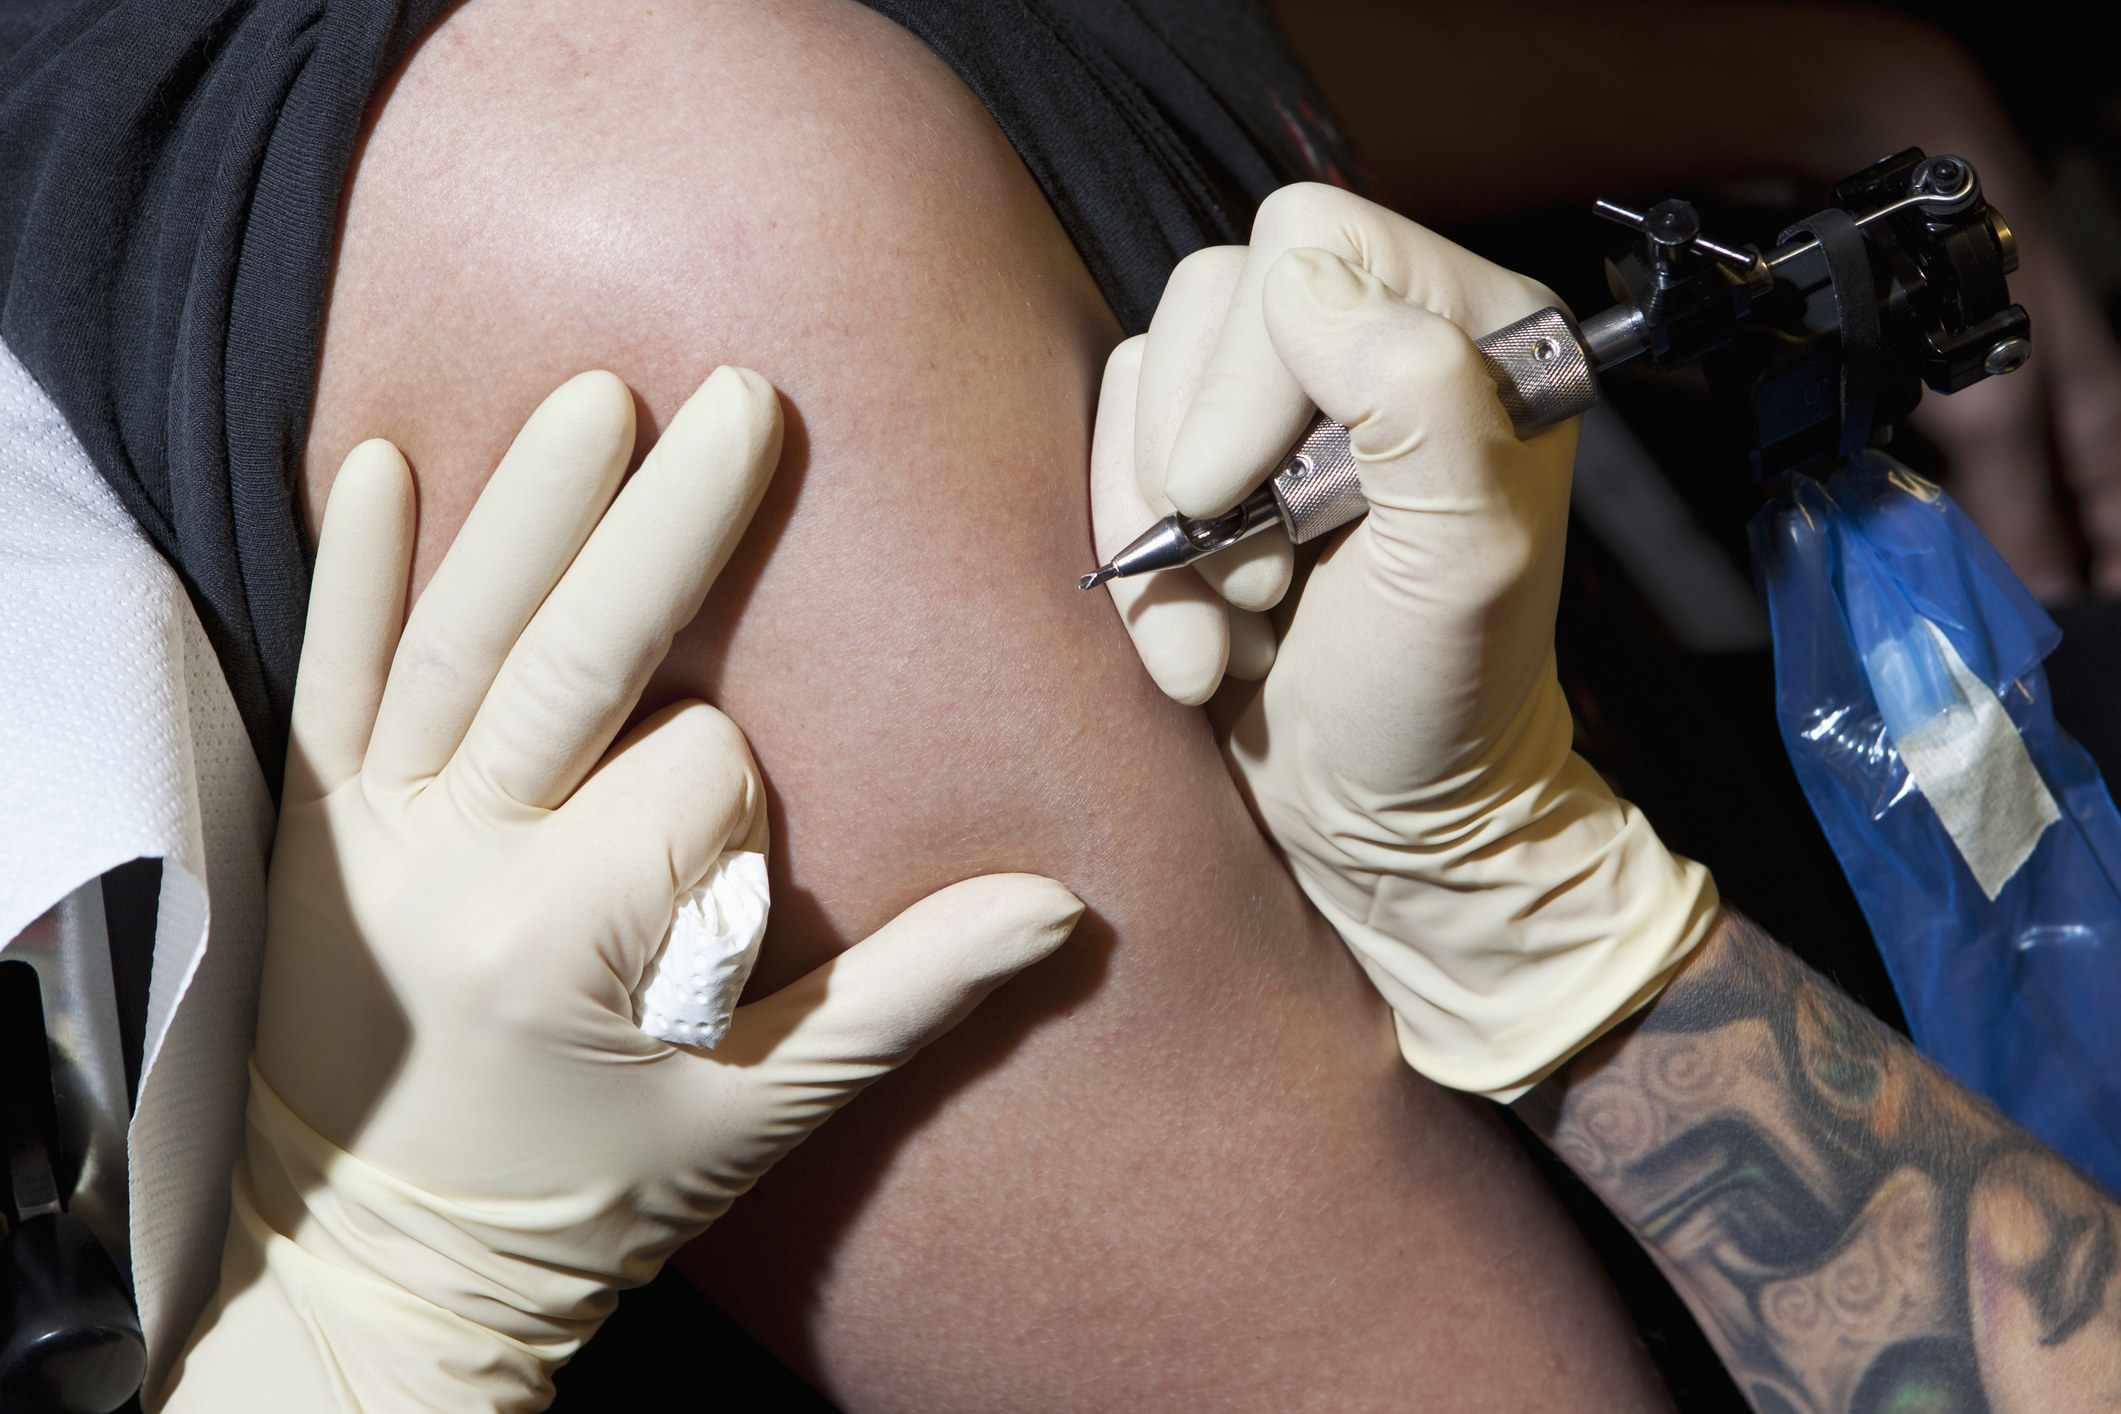 A tattoo artist tattoos an arm